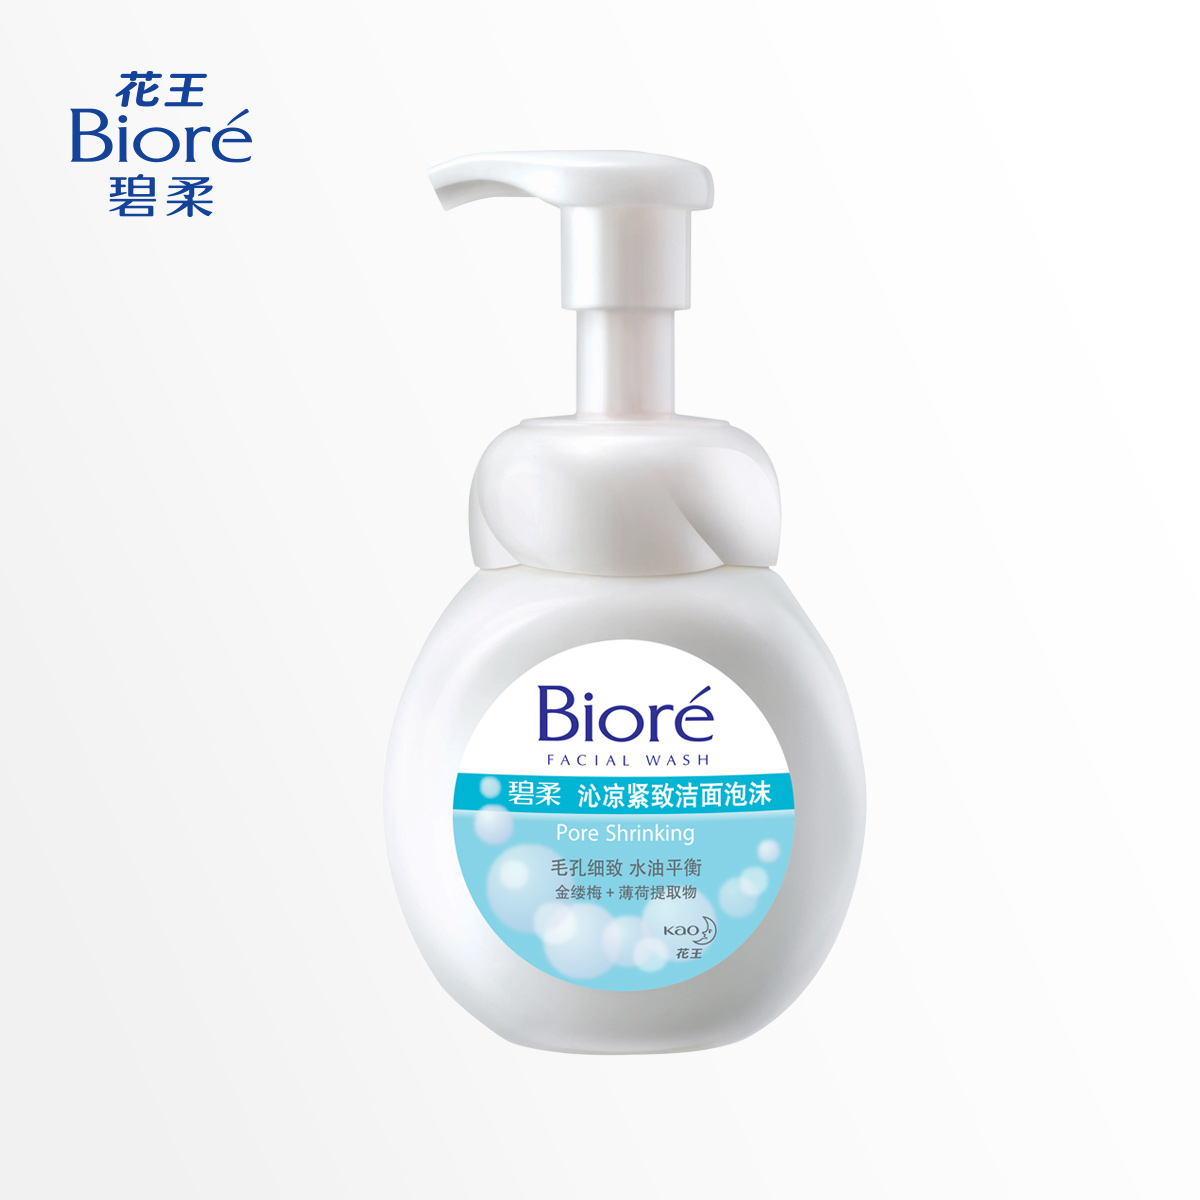 Biore/花王碧柔沁凉紧致洁面泡沫乳收毛孔温和清洁补水保湿洗面奶